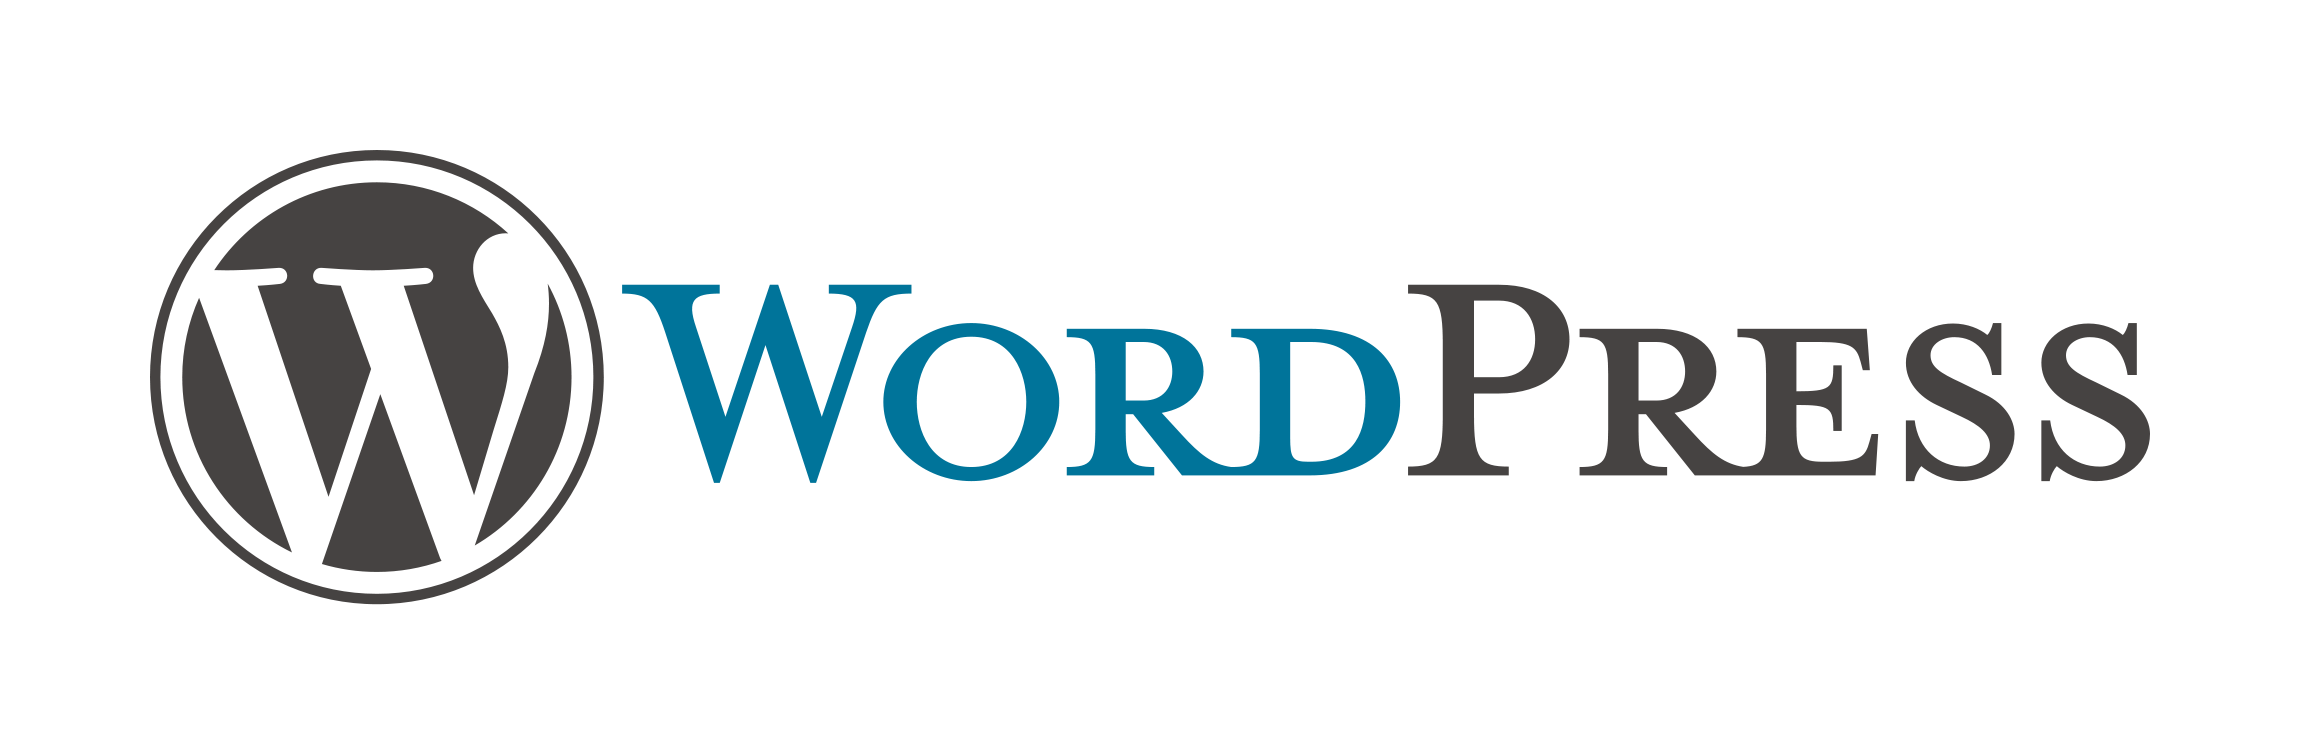 Wordpress-Logo-Transparent-Images.png